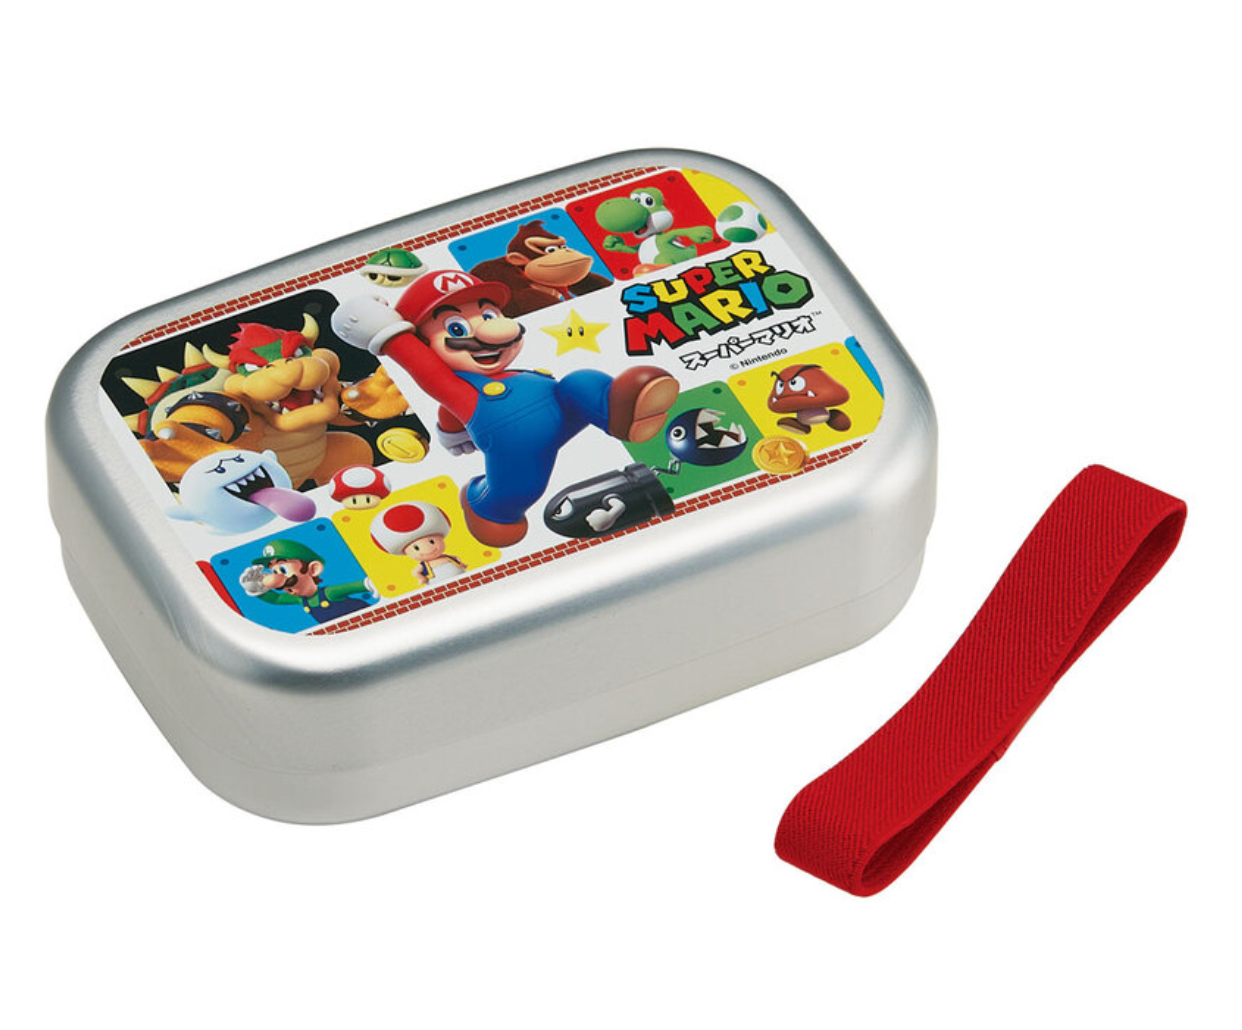 Nintendo: Super Mario Lunchbox - Germany, New - The wholesale platform